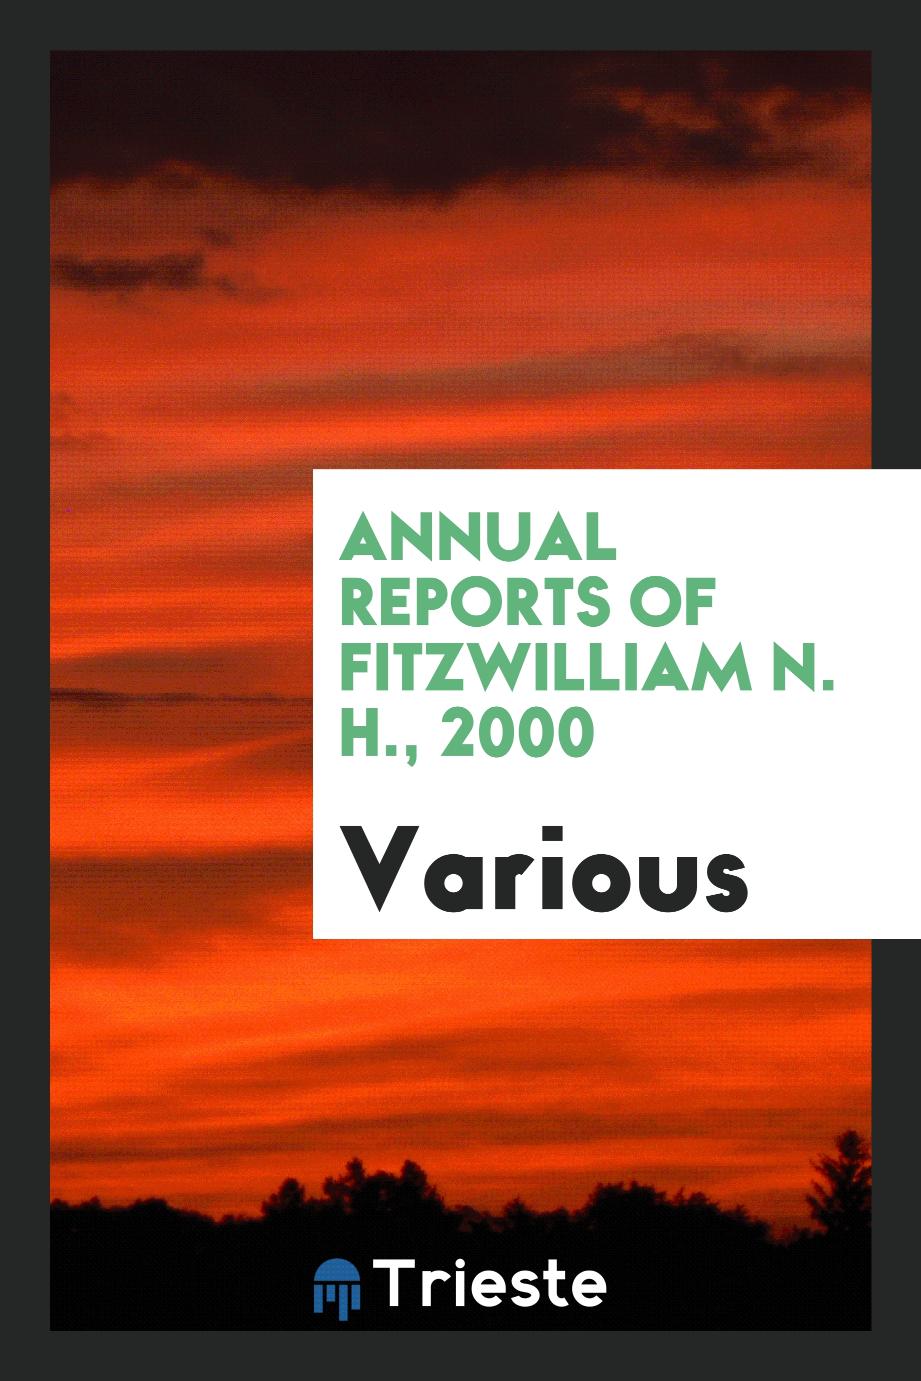 Annual Reports of Fitzwilliam N. H., 2000